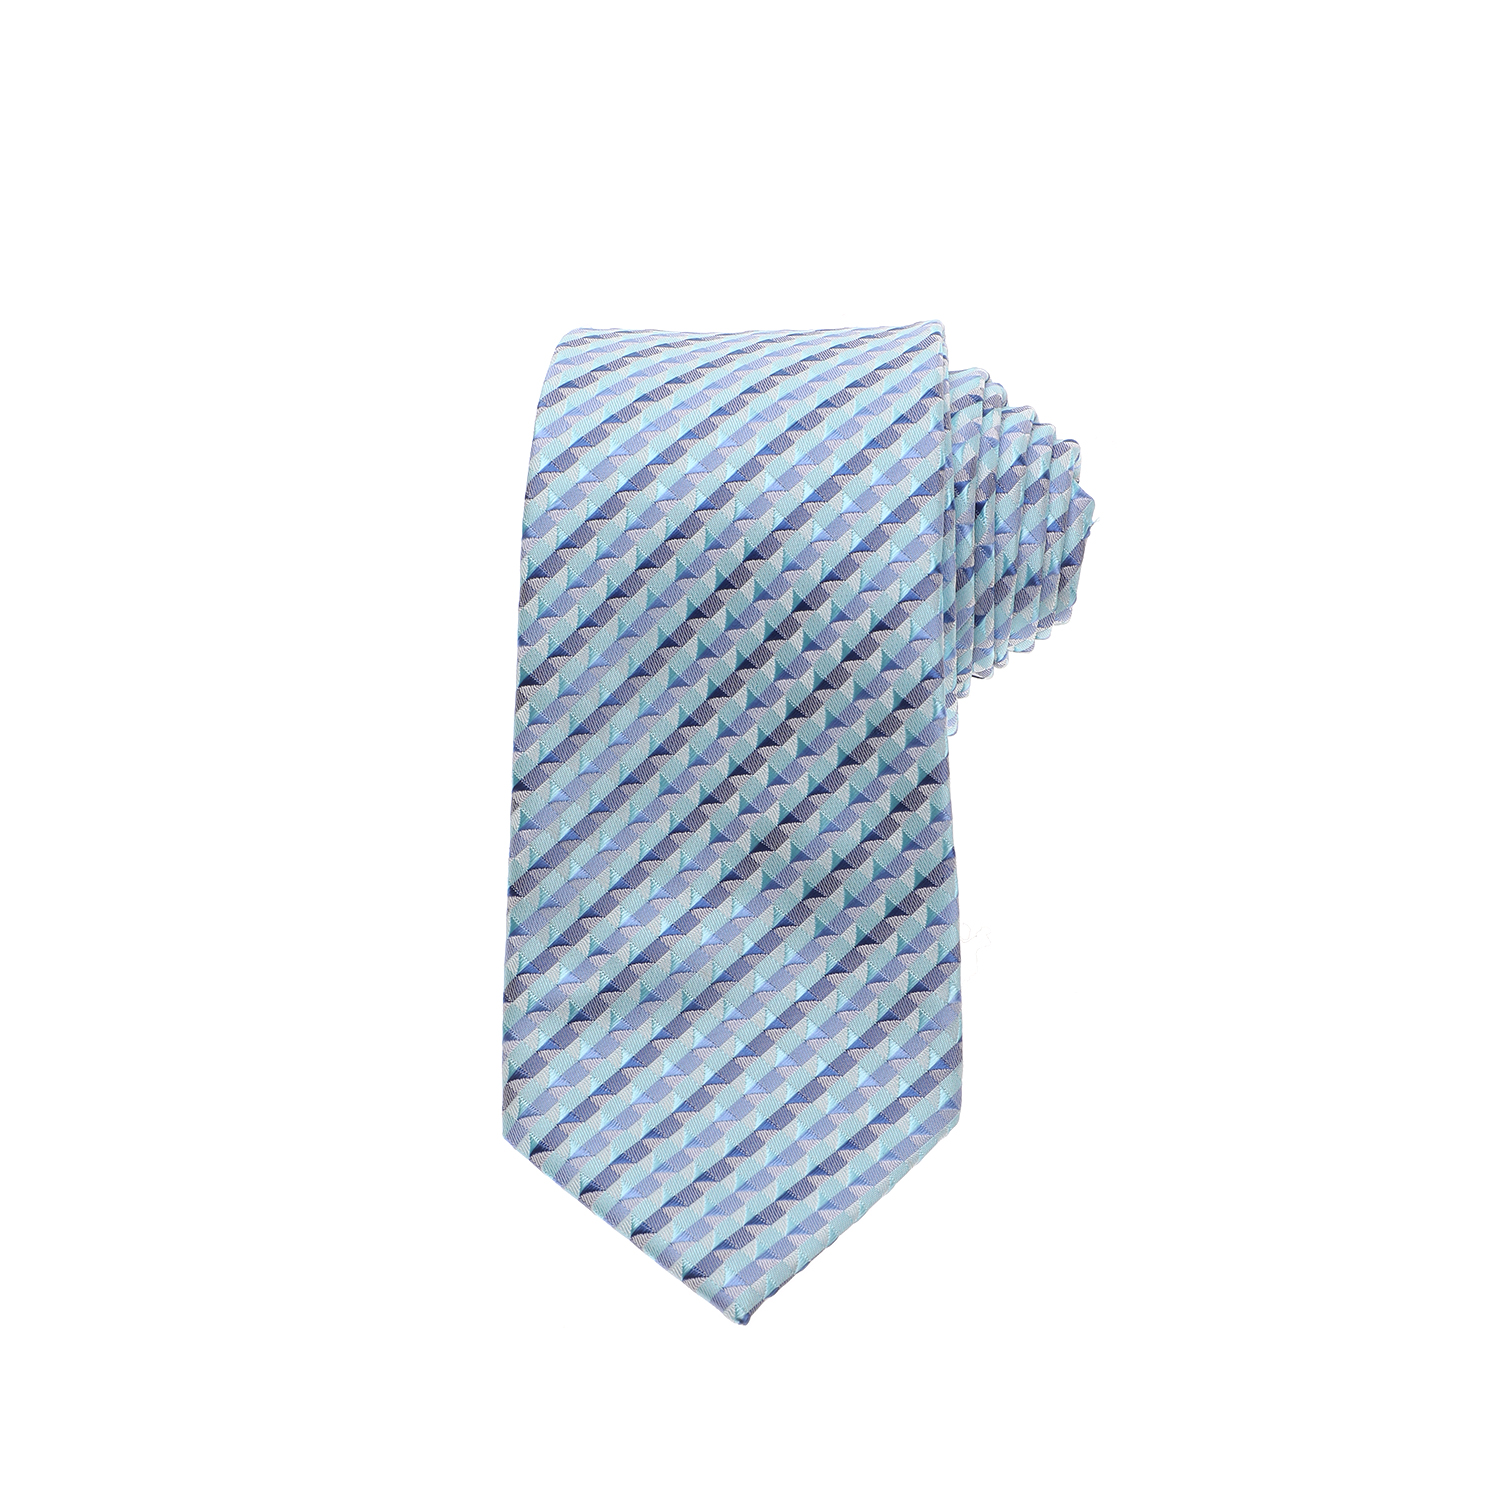 MARTIN & CO MARTIN & CO - Ανδρική γραβάτα MARTIN & CO μπλε